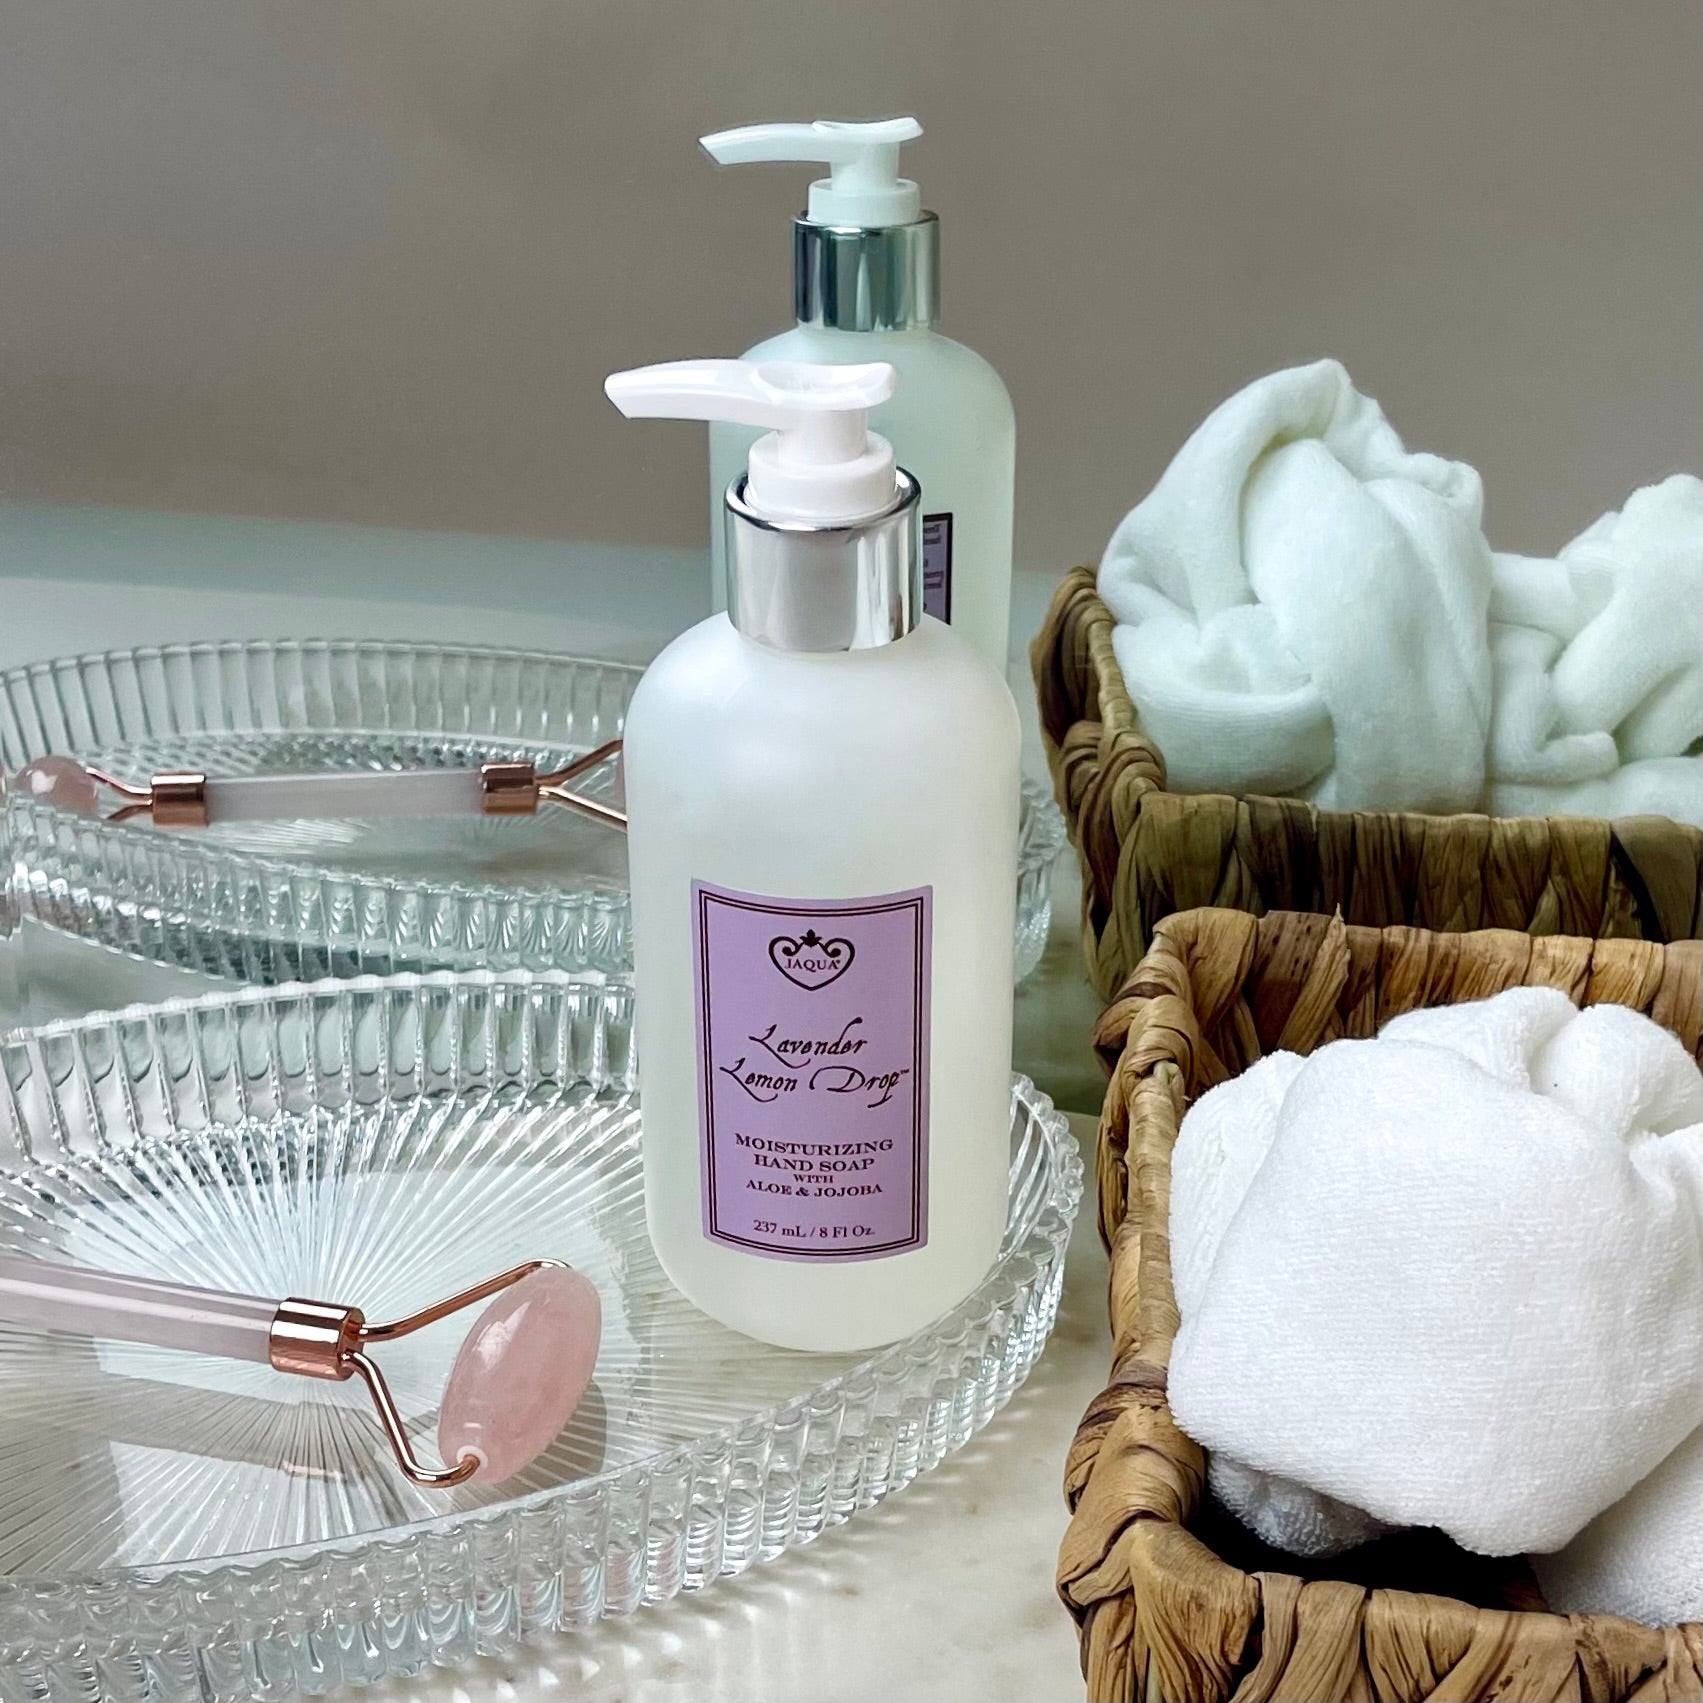 Moisturizing Hand Soap with Aloe Lavender